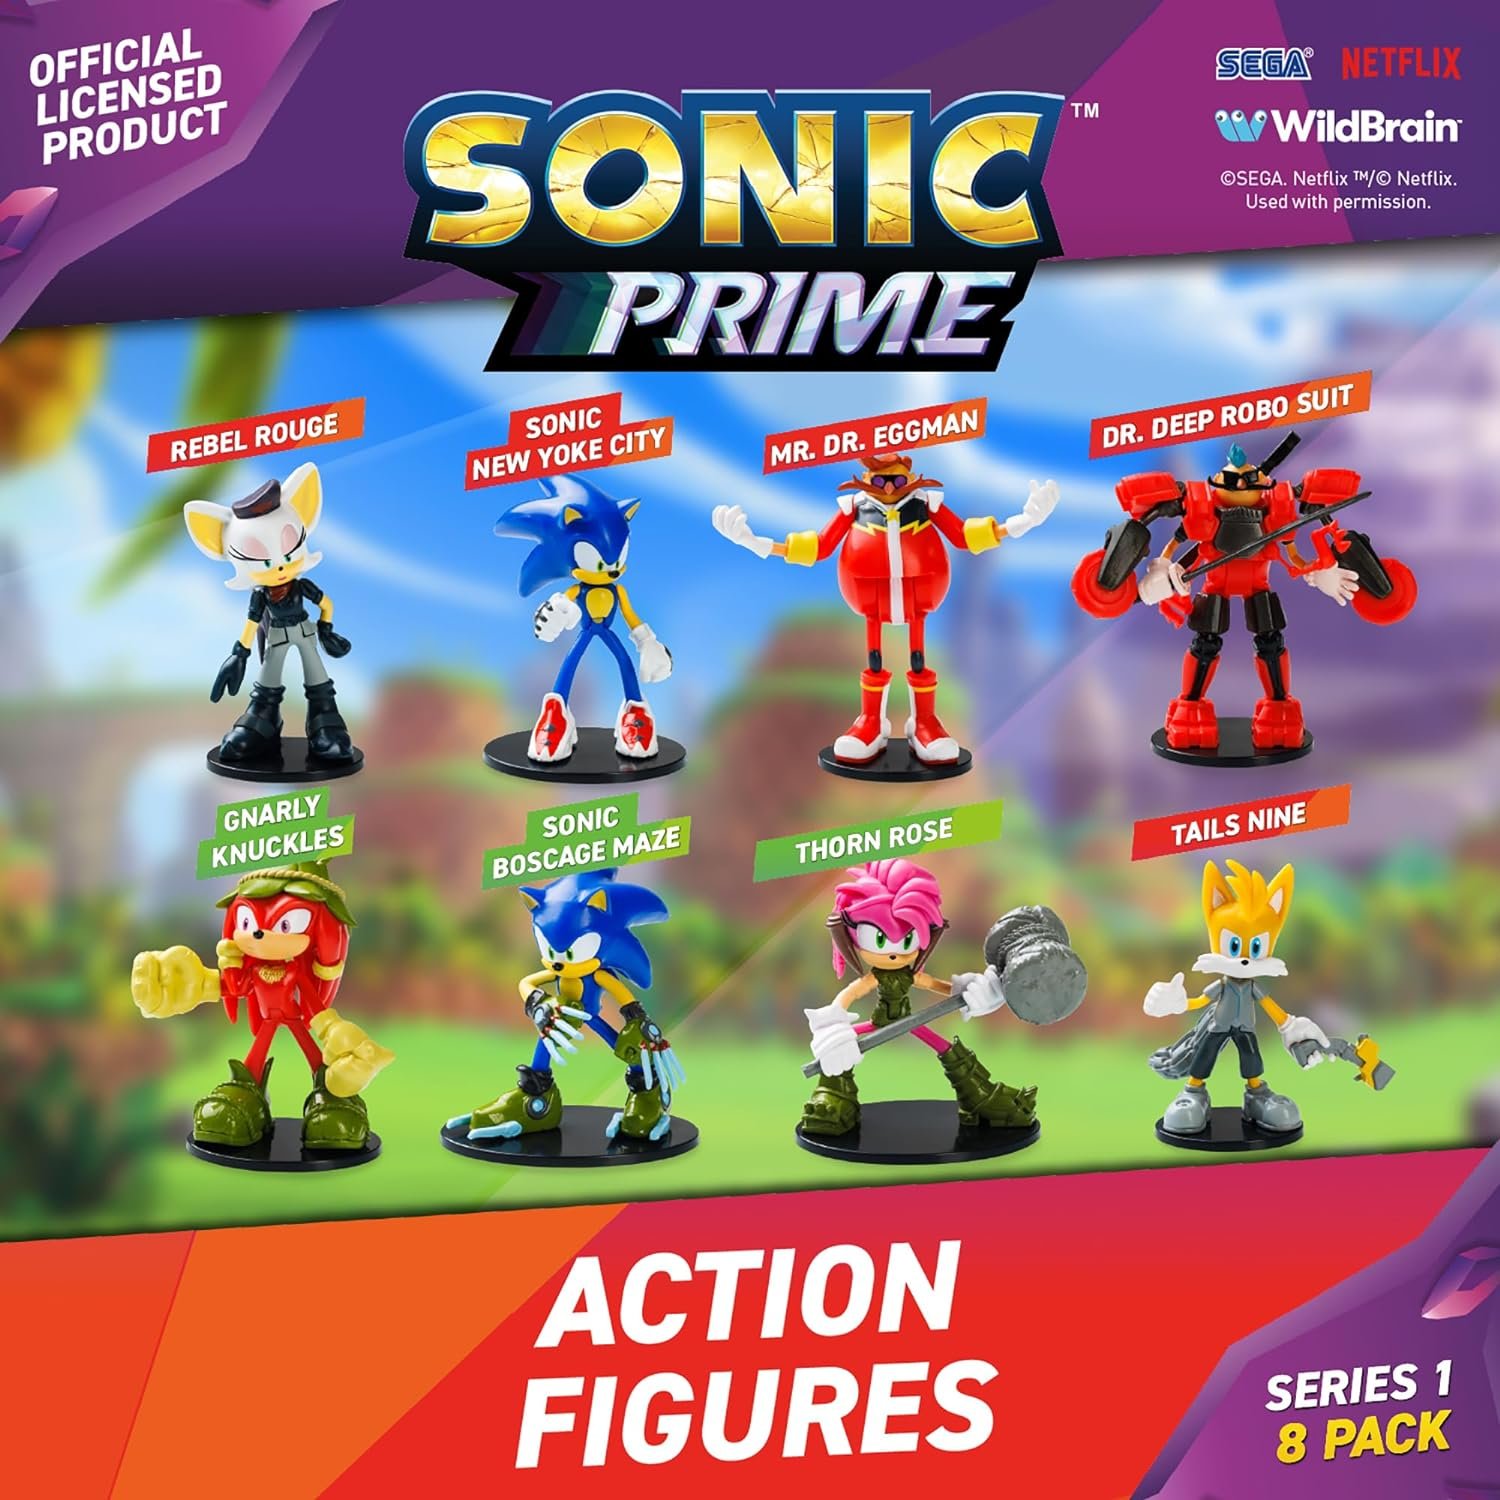 Netflix Sonic Prime Figures 12pk, Action Figures